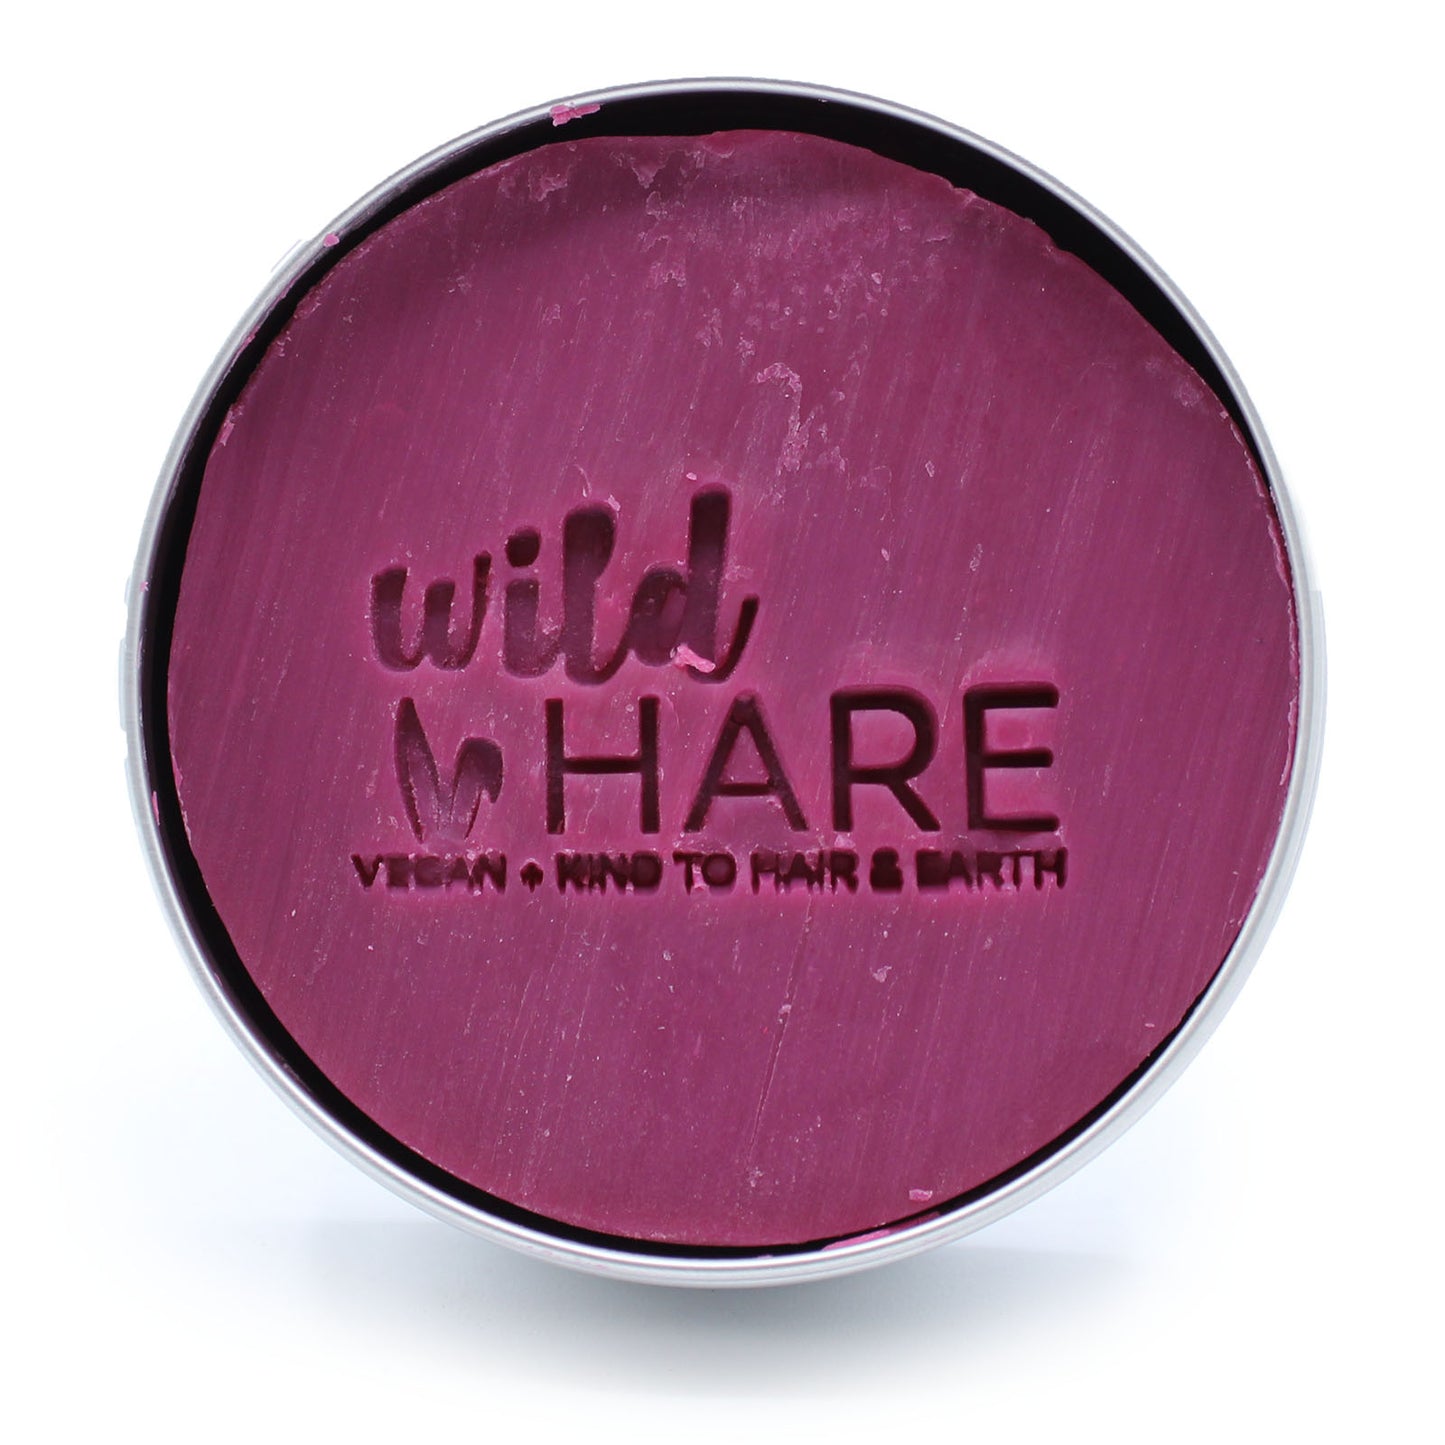 Wild Hare Solid Shampoo 60g - Cherry Bonbon